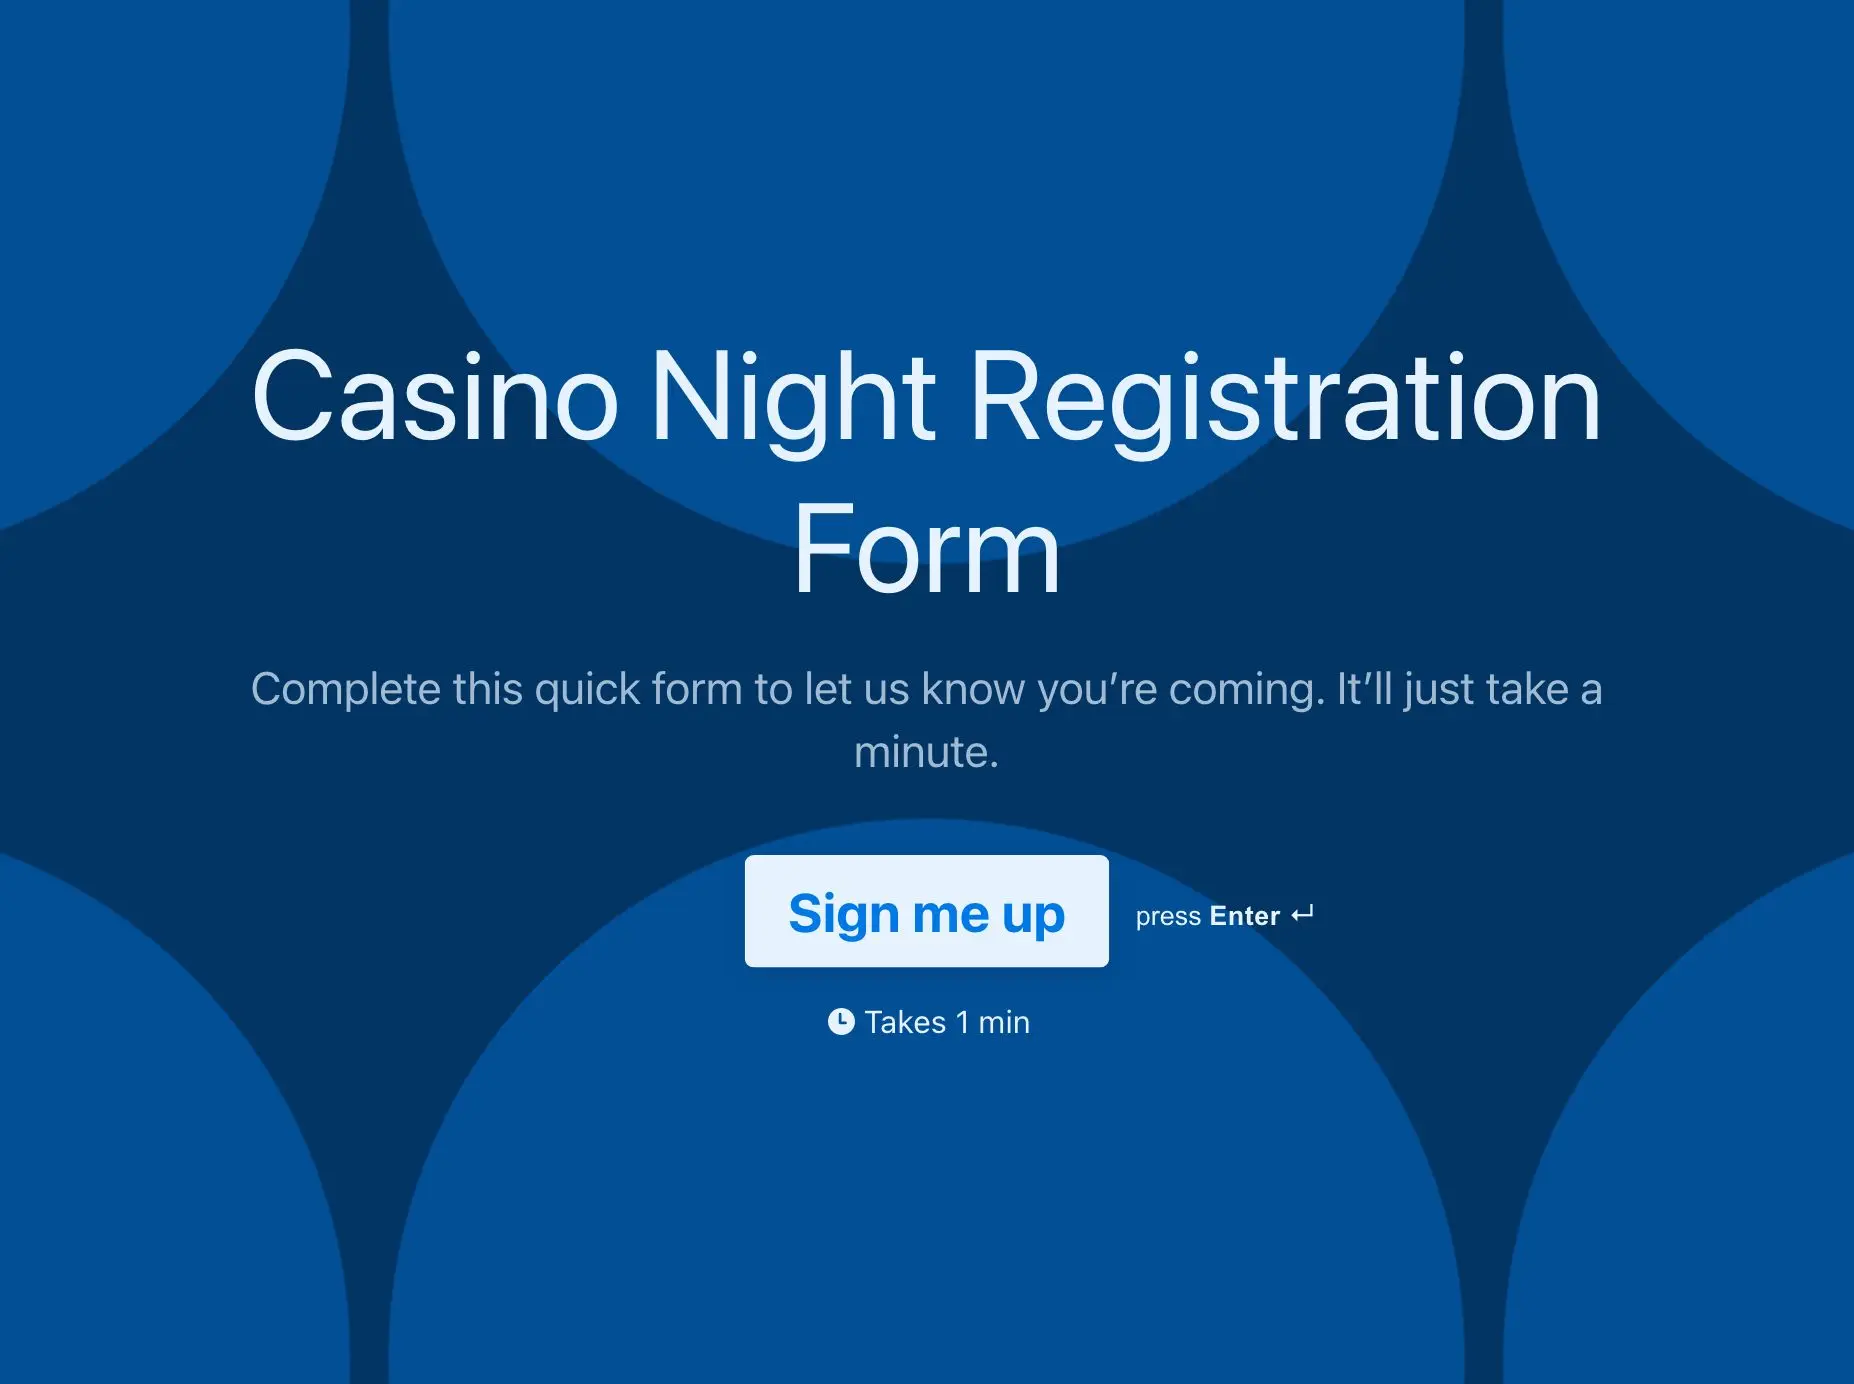 Casino Night Registration Form Template Hero